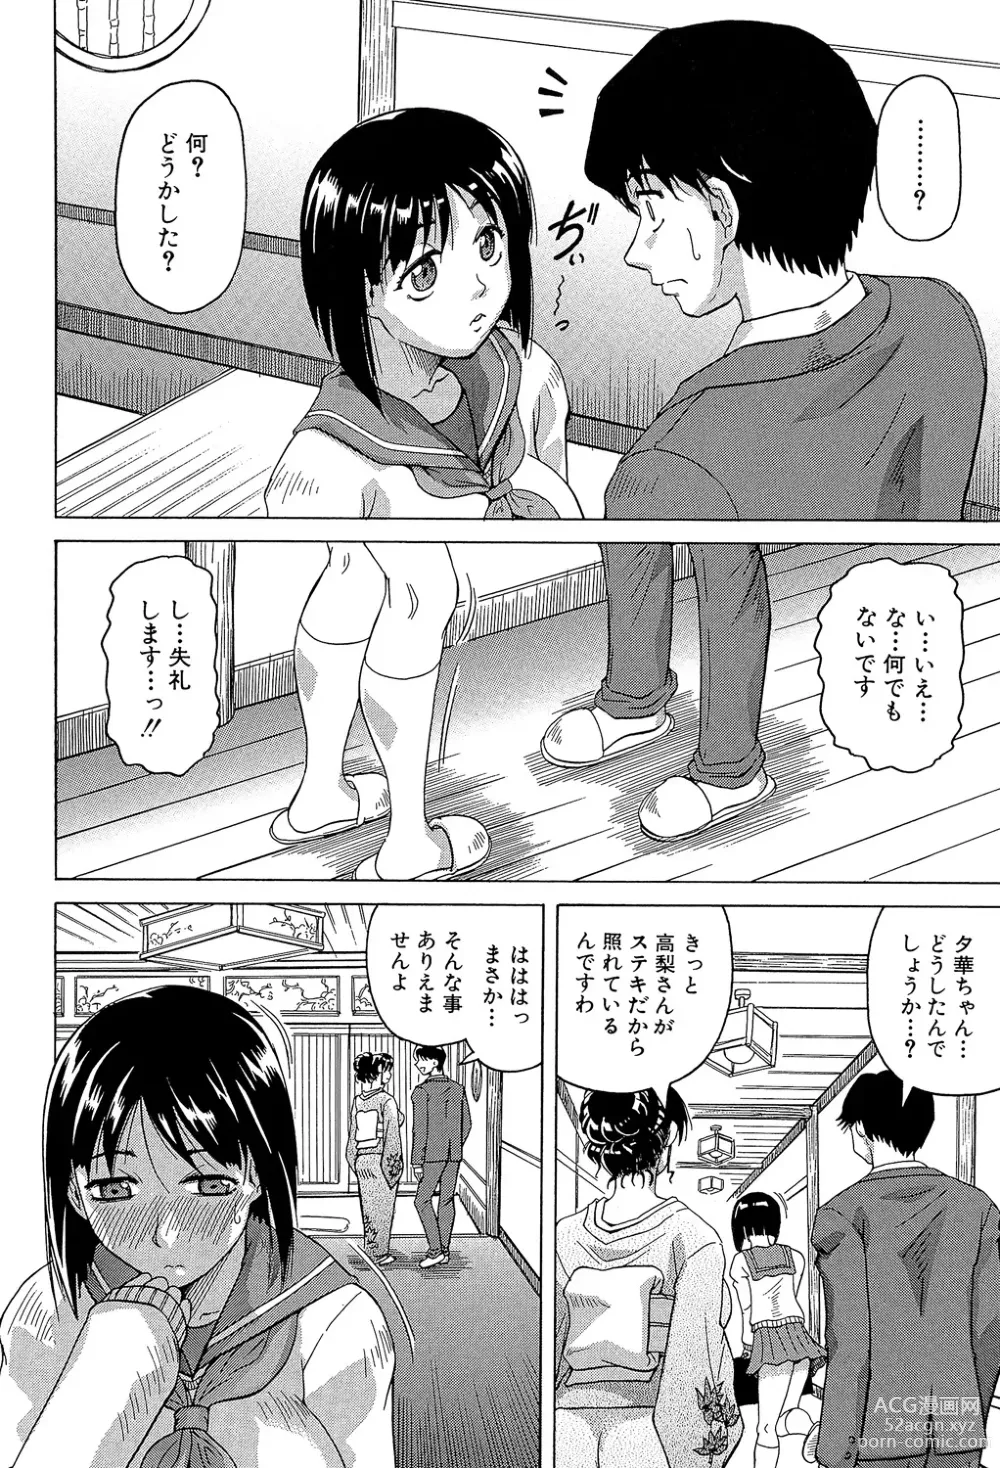 Page 14 of manga Oyako no Utage